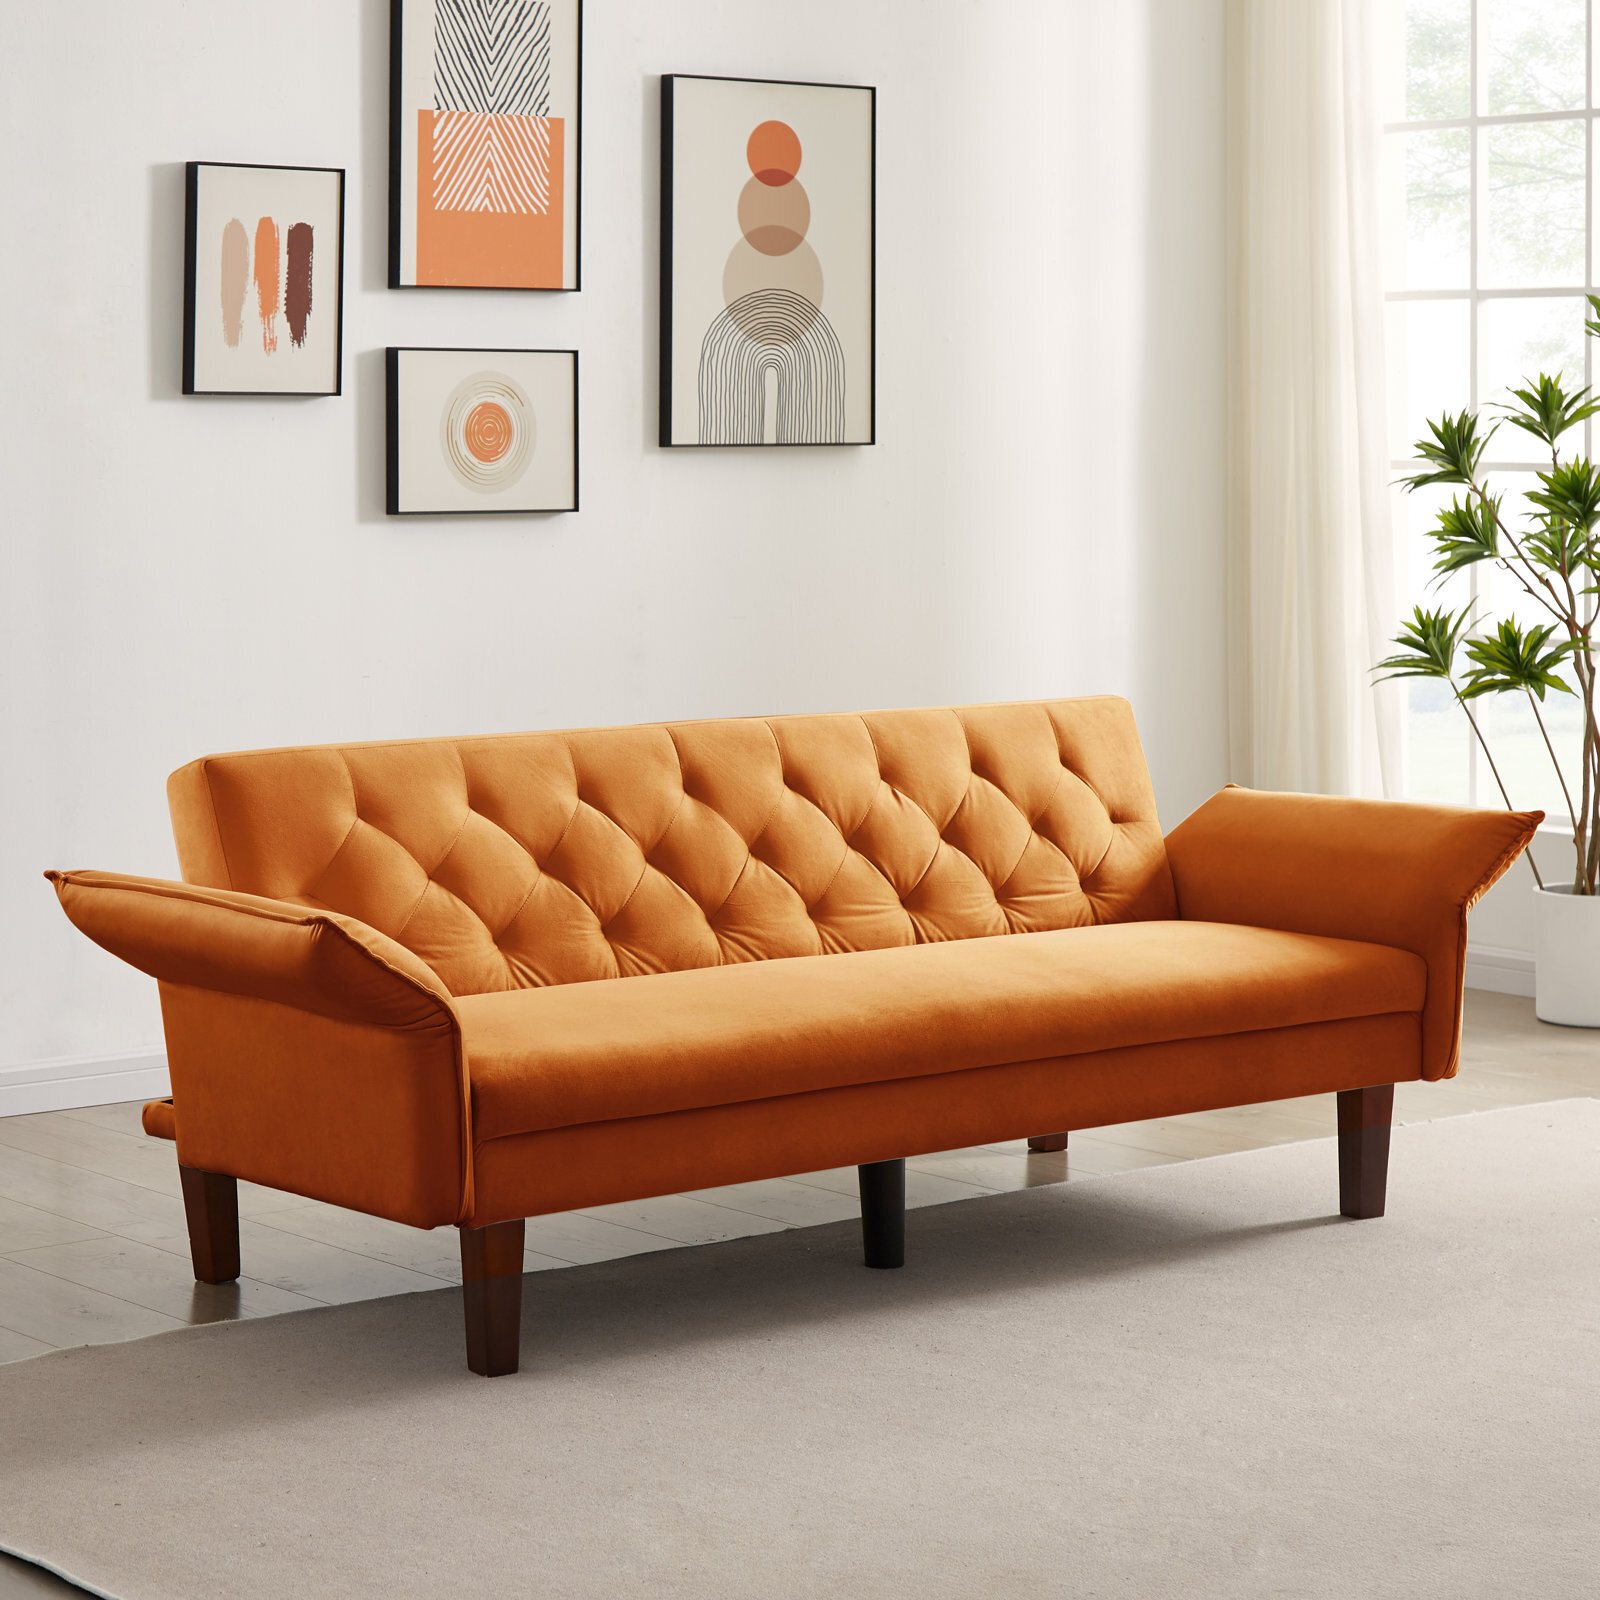 Midcentury Modern Klik Klak Sofa